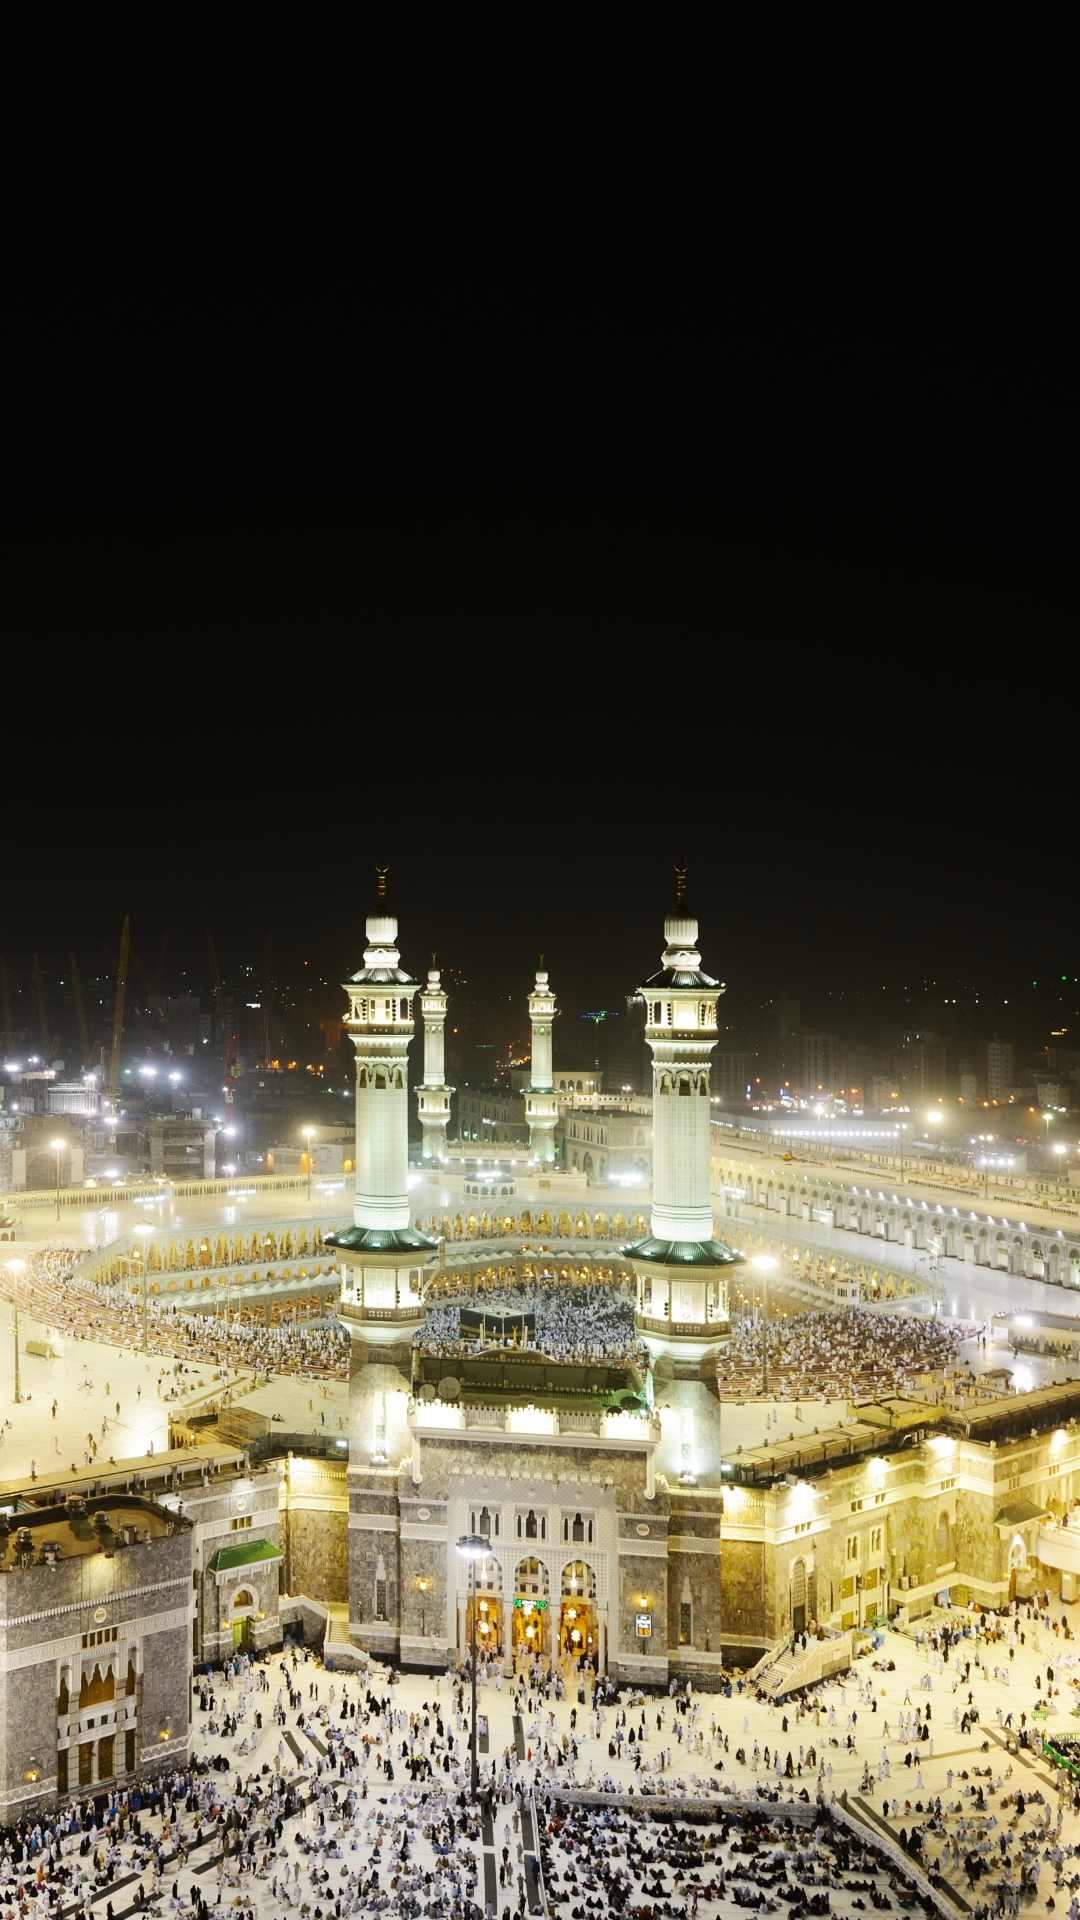 masjid al haram (mecca), religious, mosques